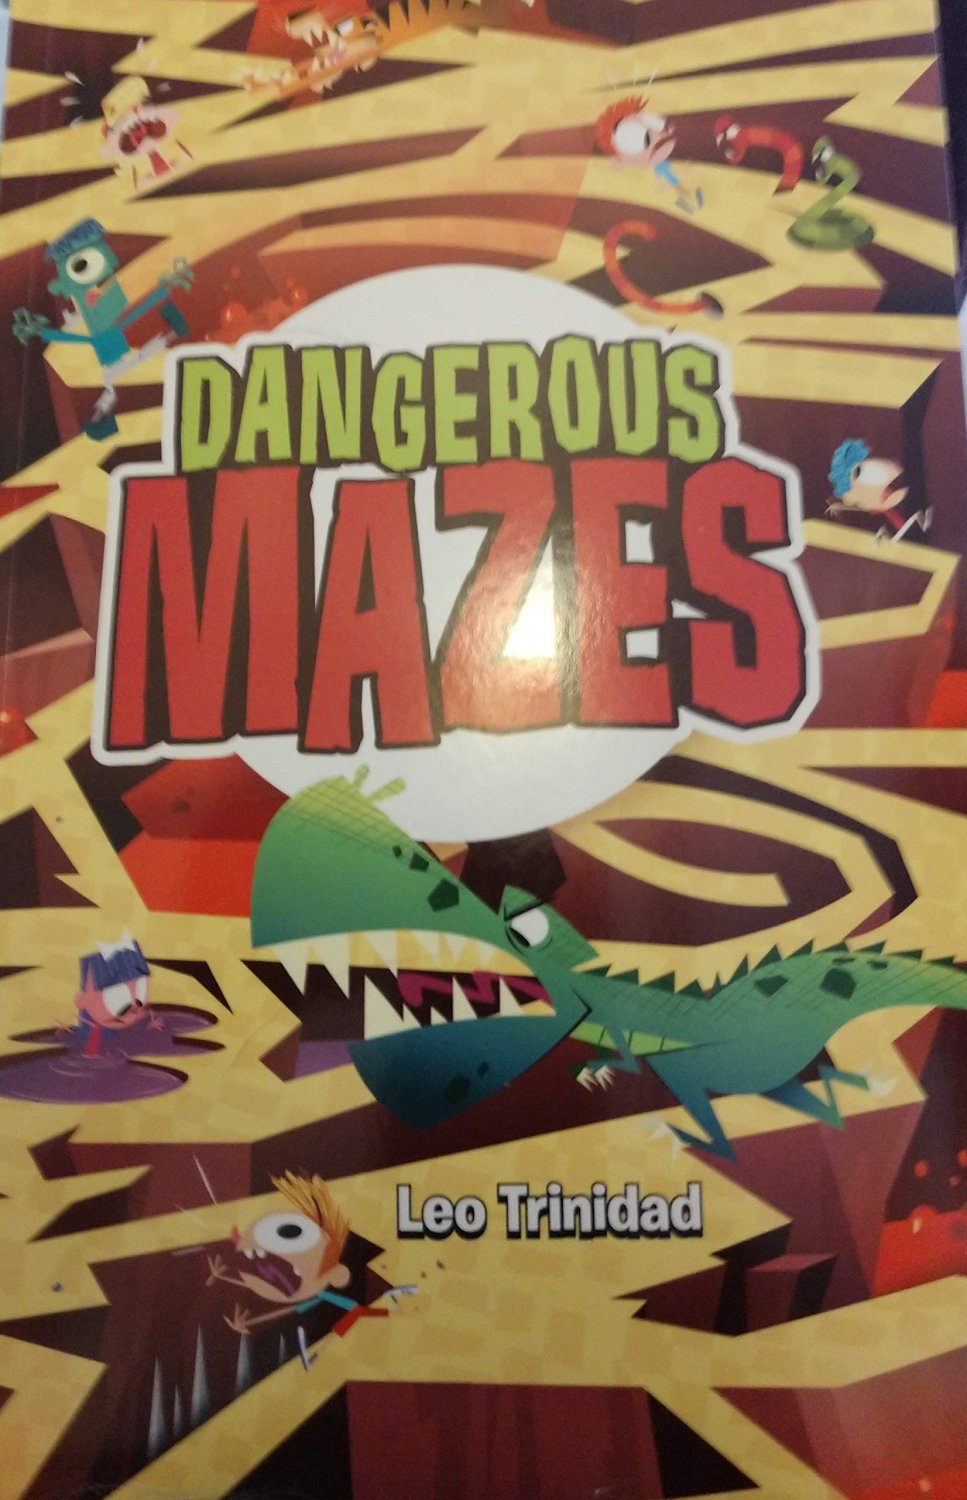 Dangerous Mazes